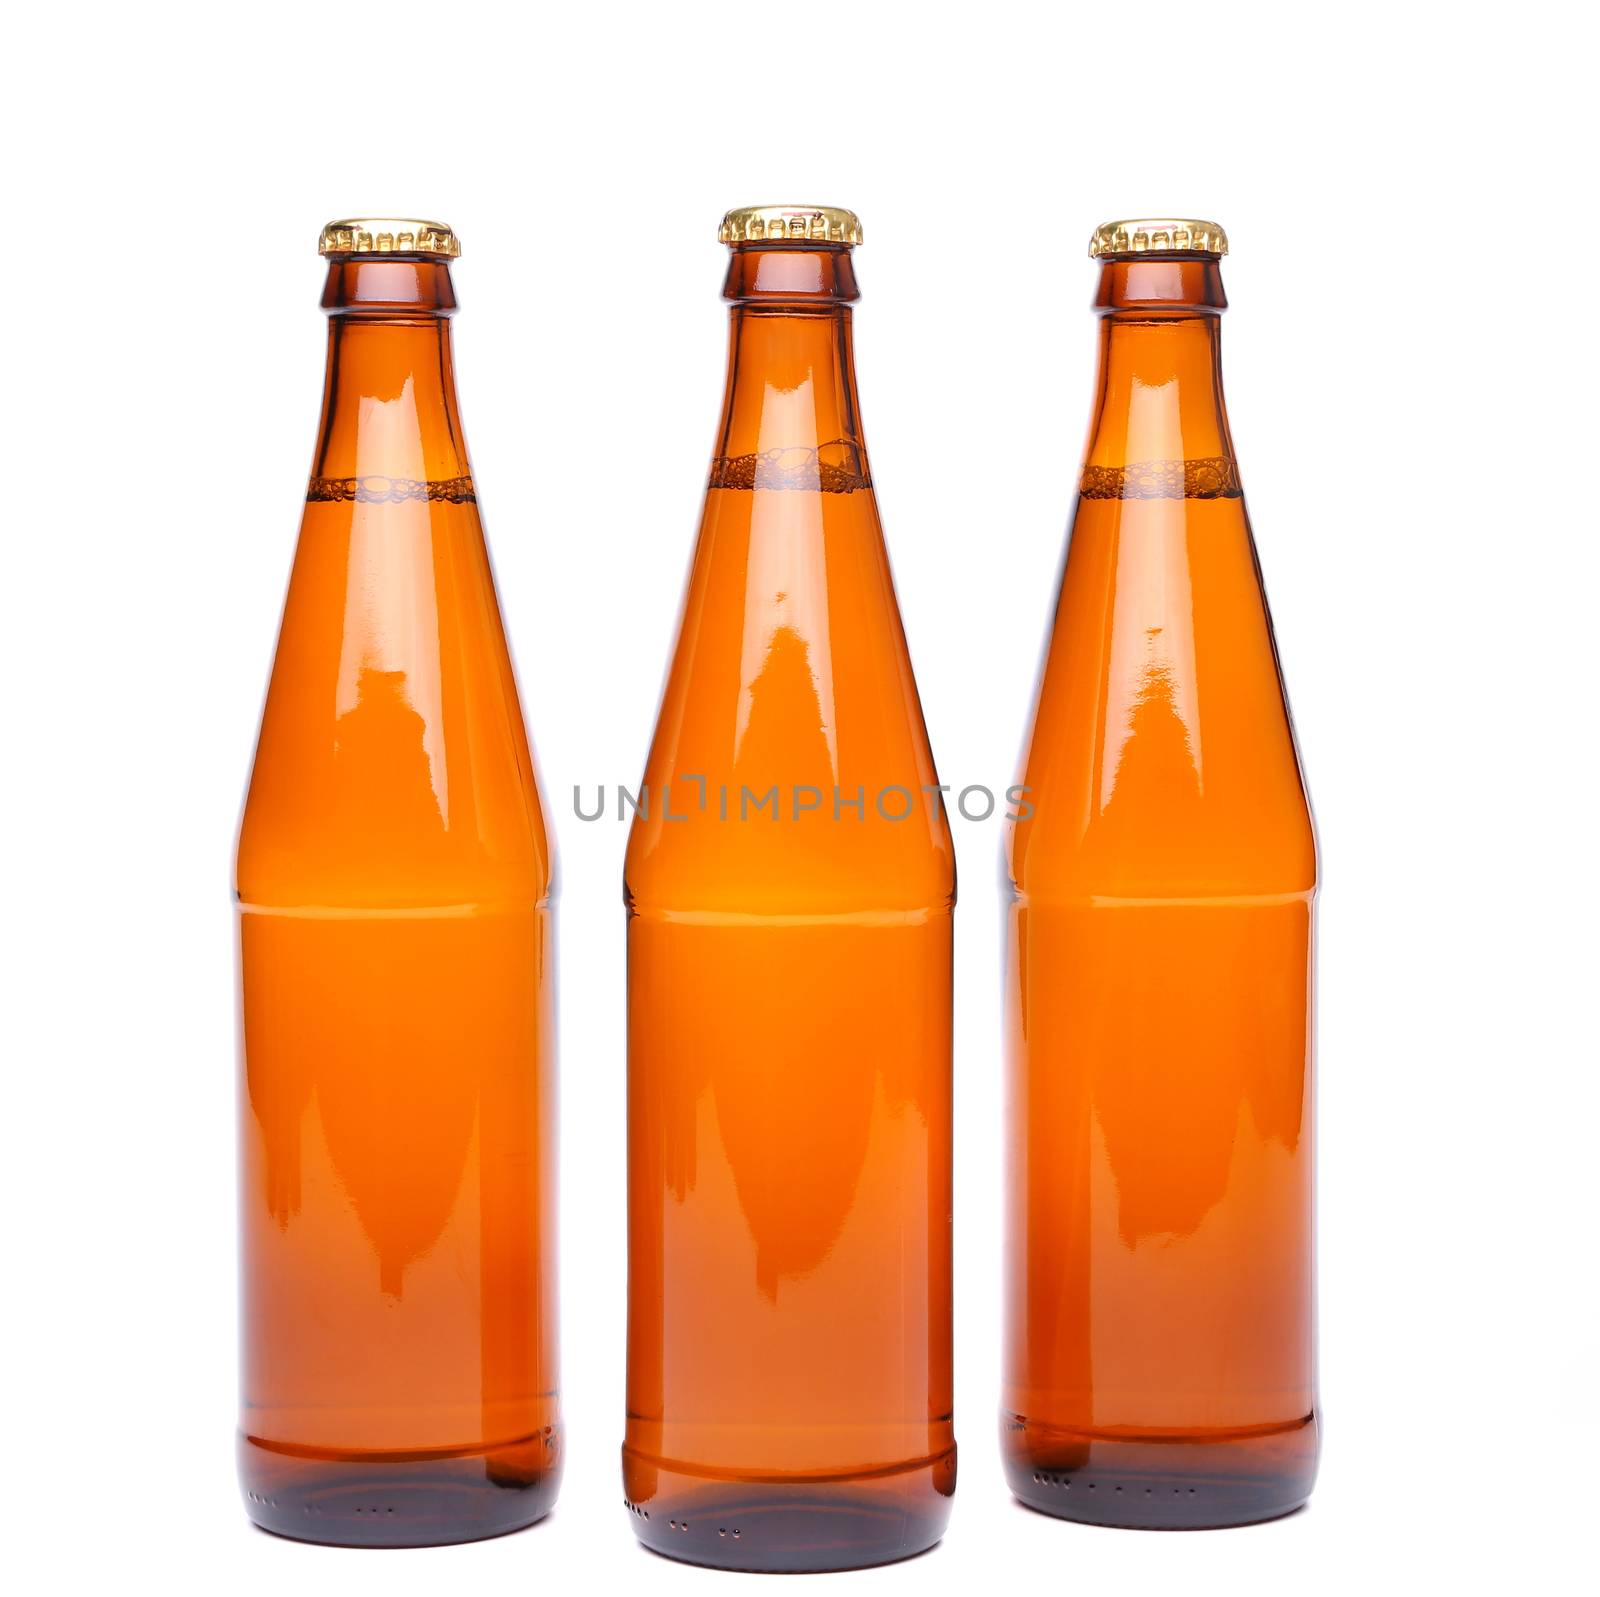 Three brown beer bottle by indigolotos